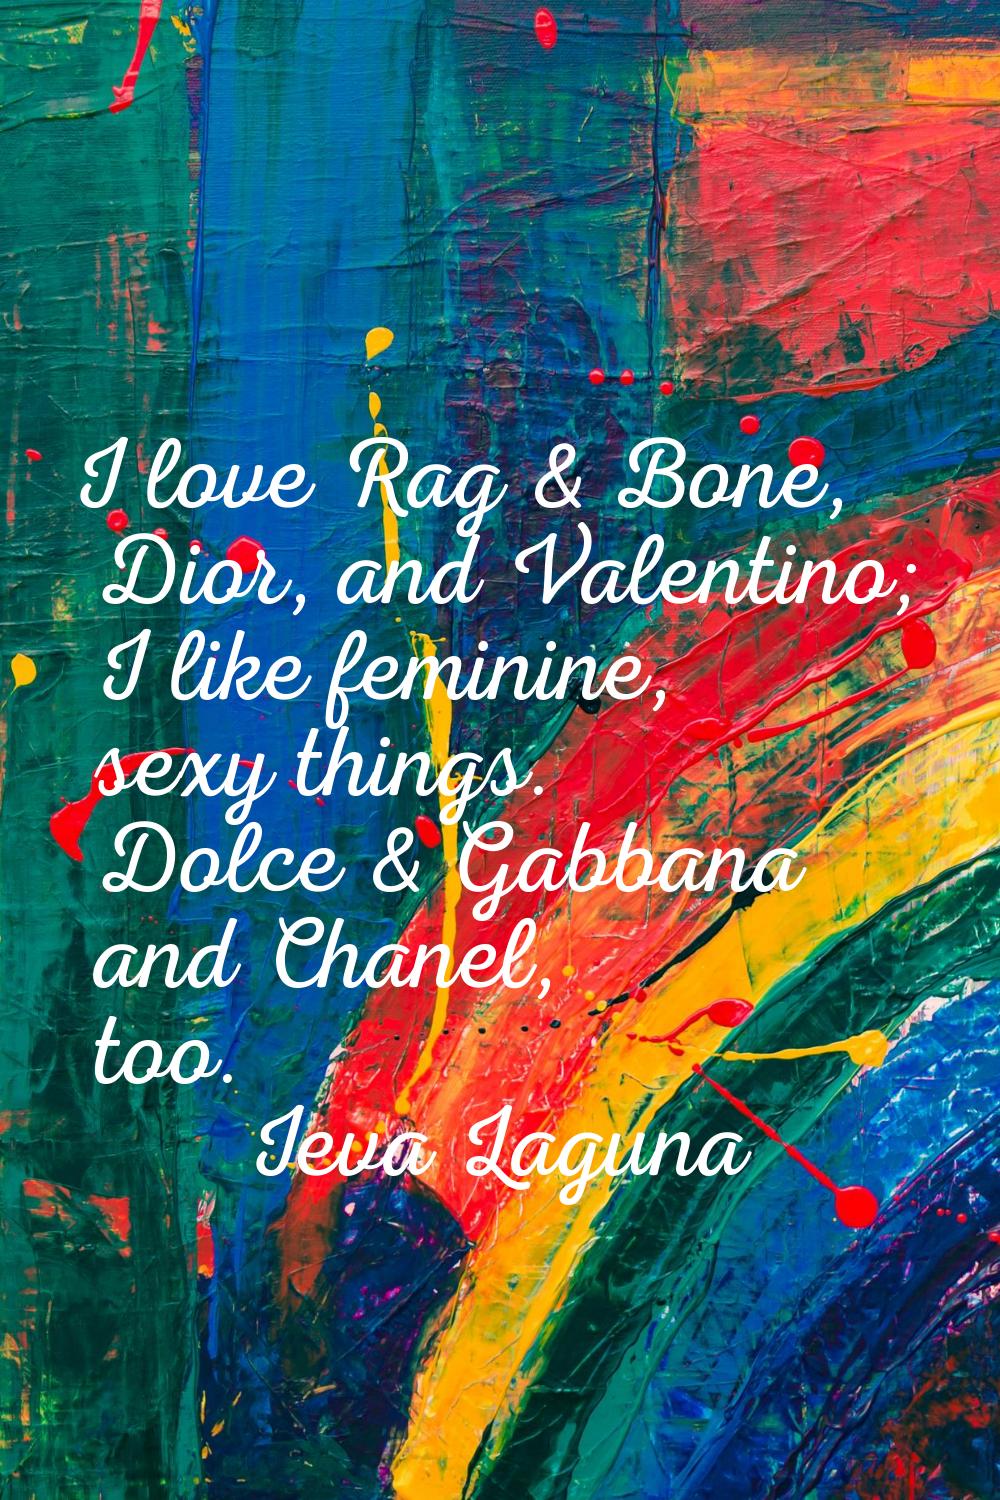 I love Rag & Bone, Dior, and Valentino; I like feminine, sexy things. Dolce & Gabbana and Chanel, t